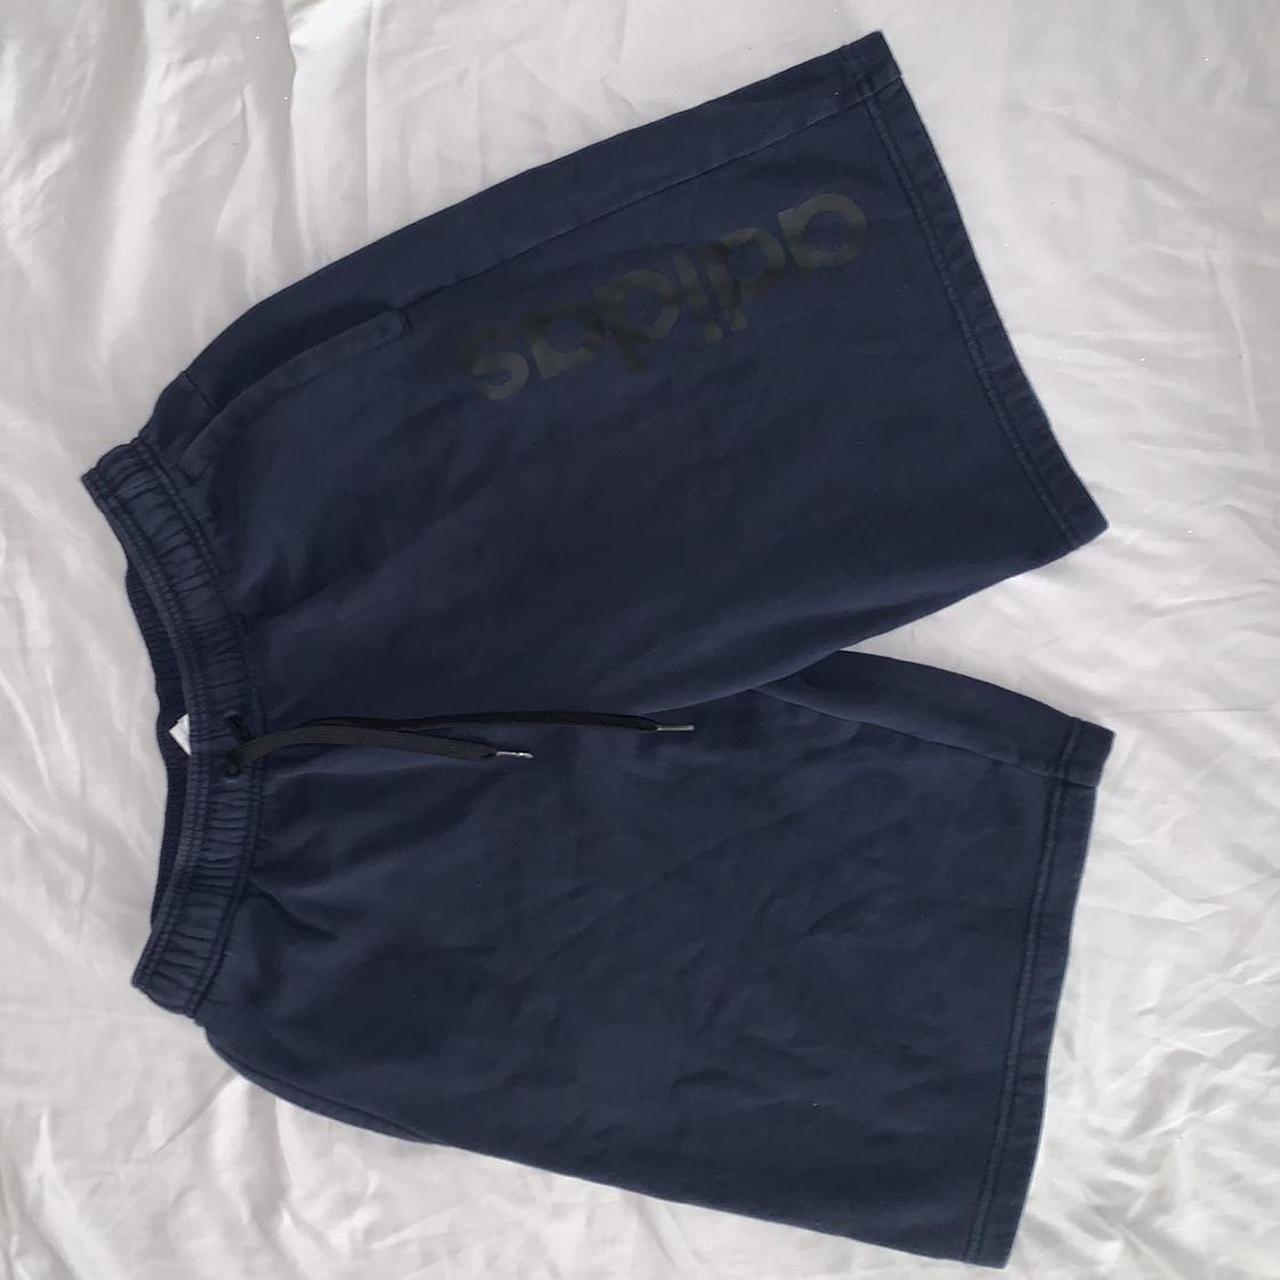 Adidas Men's Navy Shorts